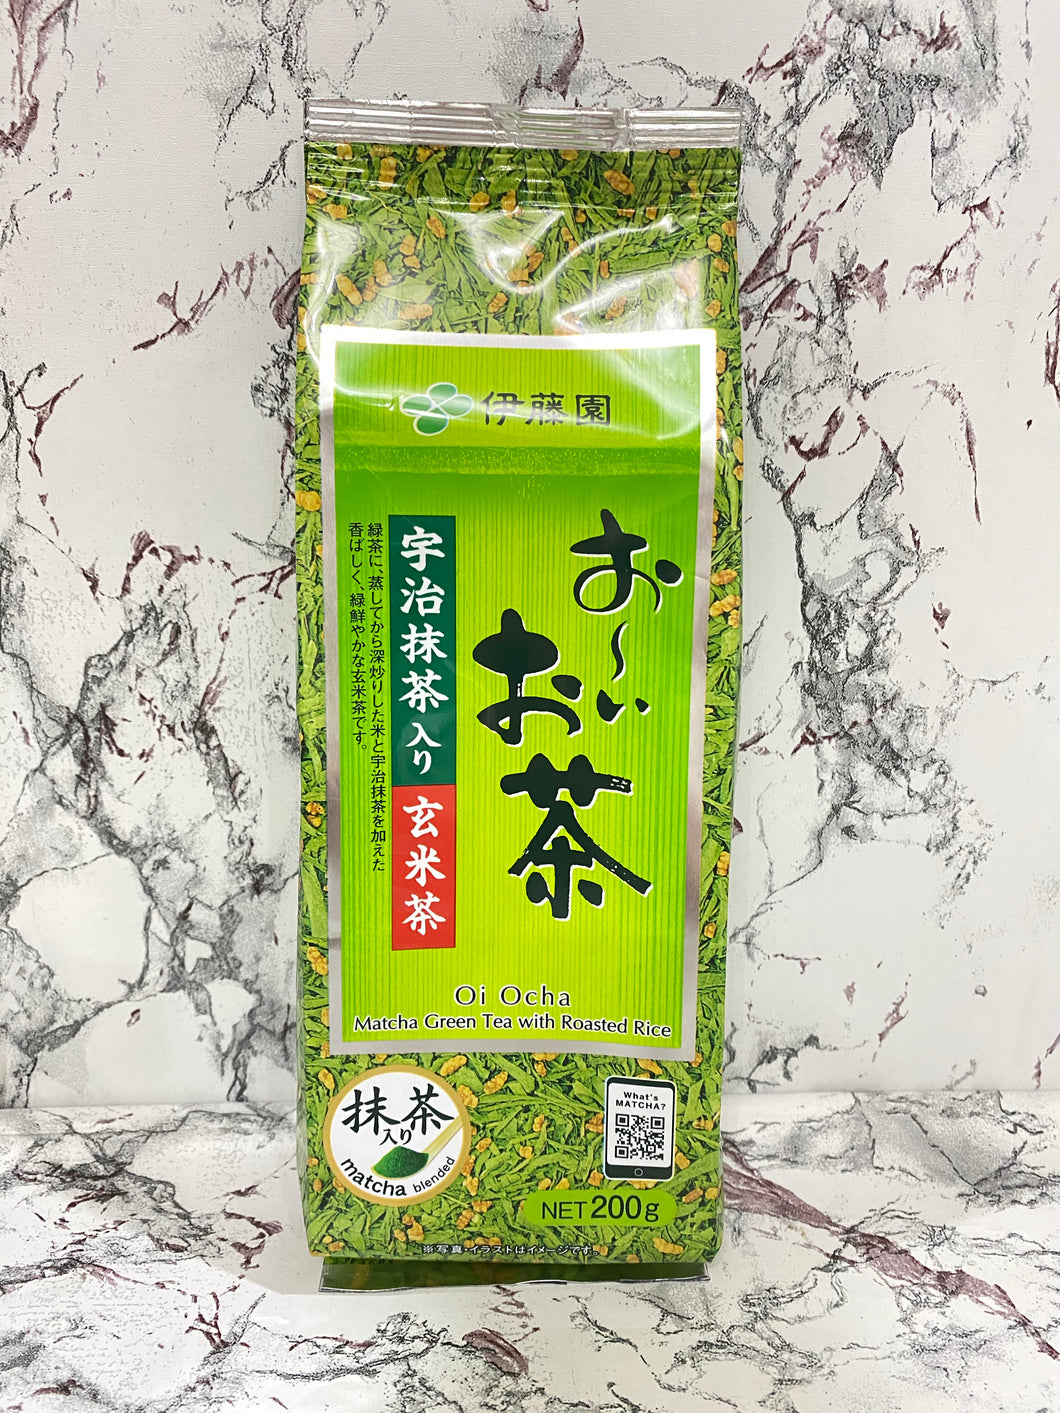 Itoen Oi Ocha Matcha Green Tea with Roasted Rice 200g